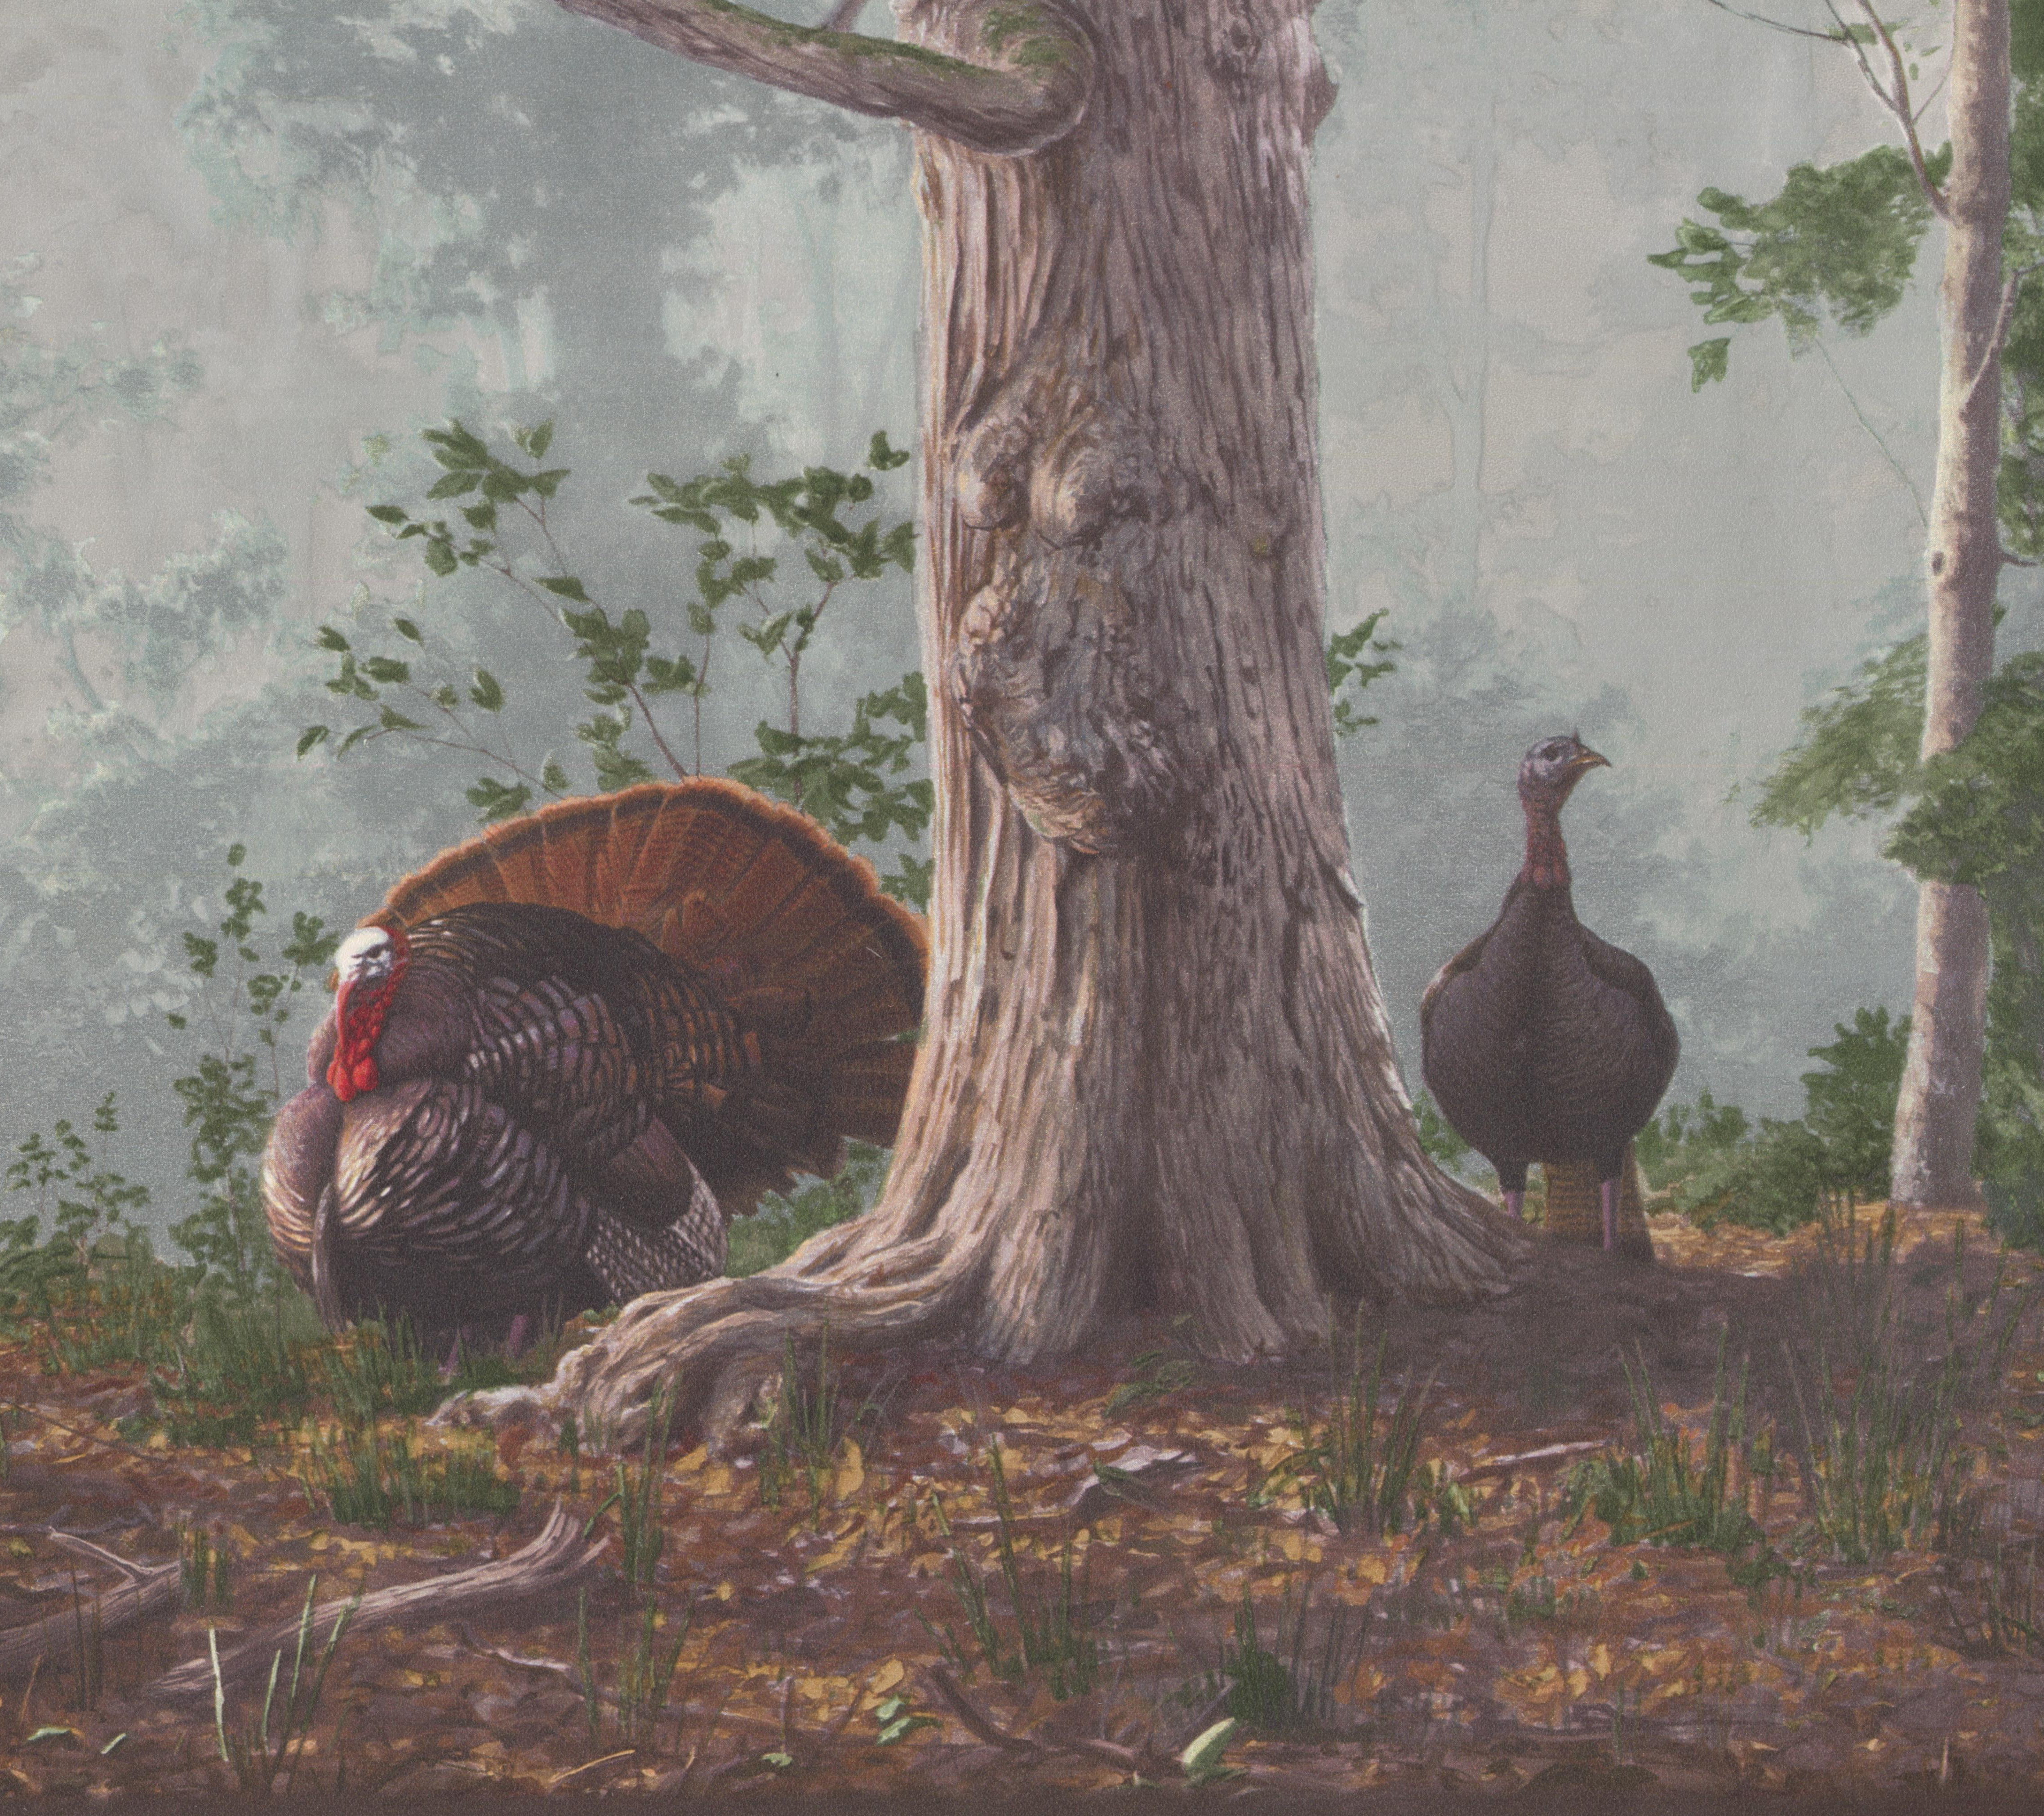 Turkeys in the Forest Brown Green Nature Wide Wallpaper Border Retro Design Roll 15 x 10.5